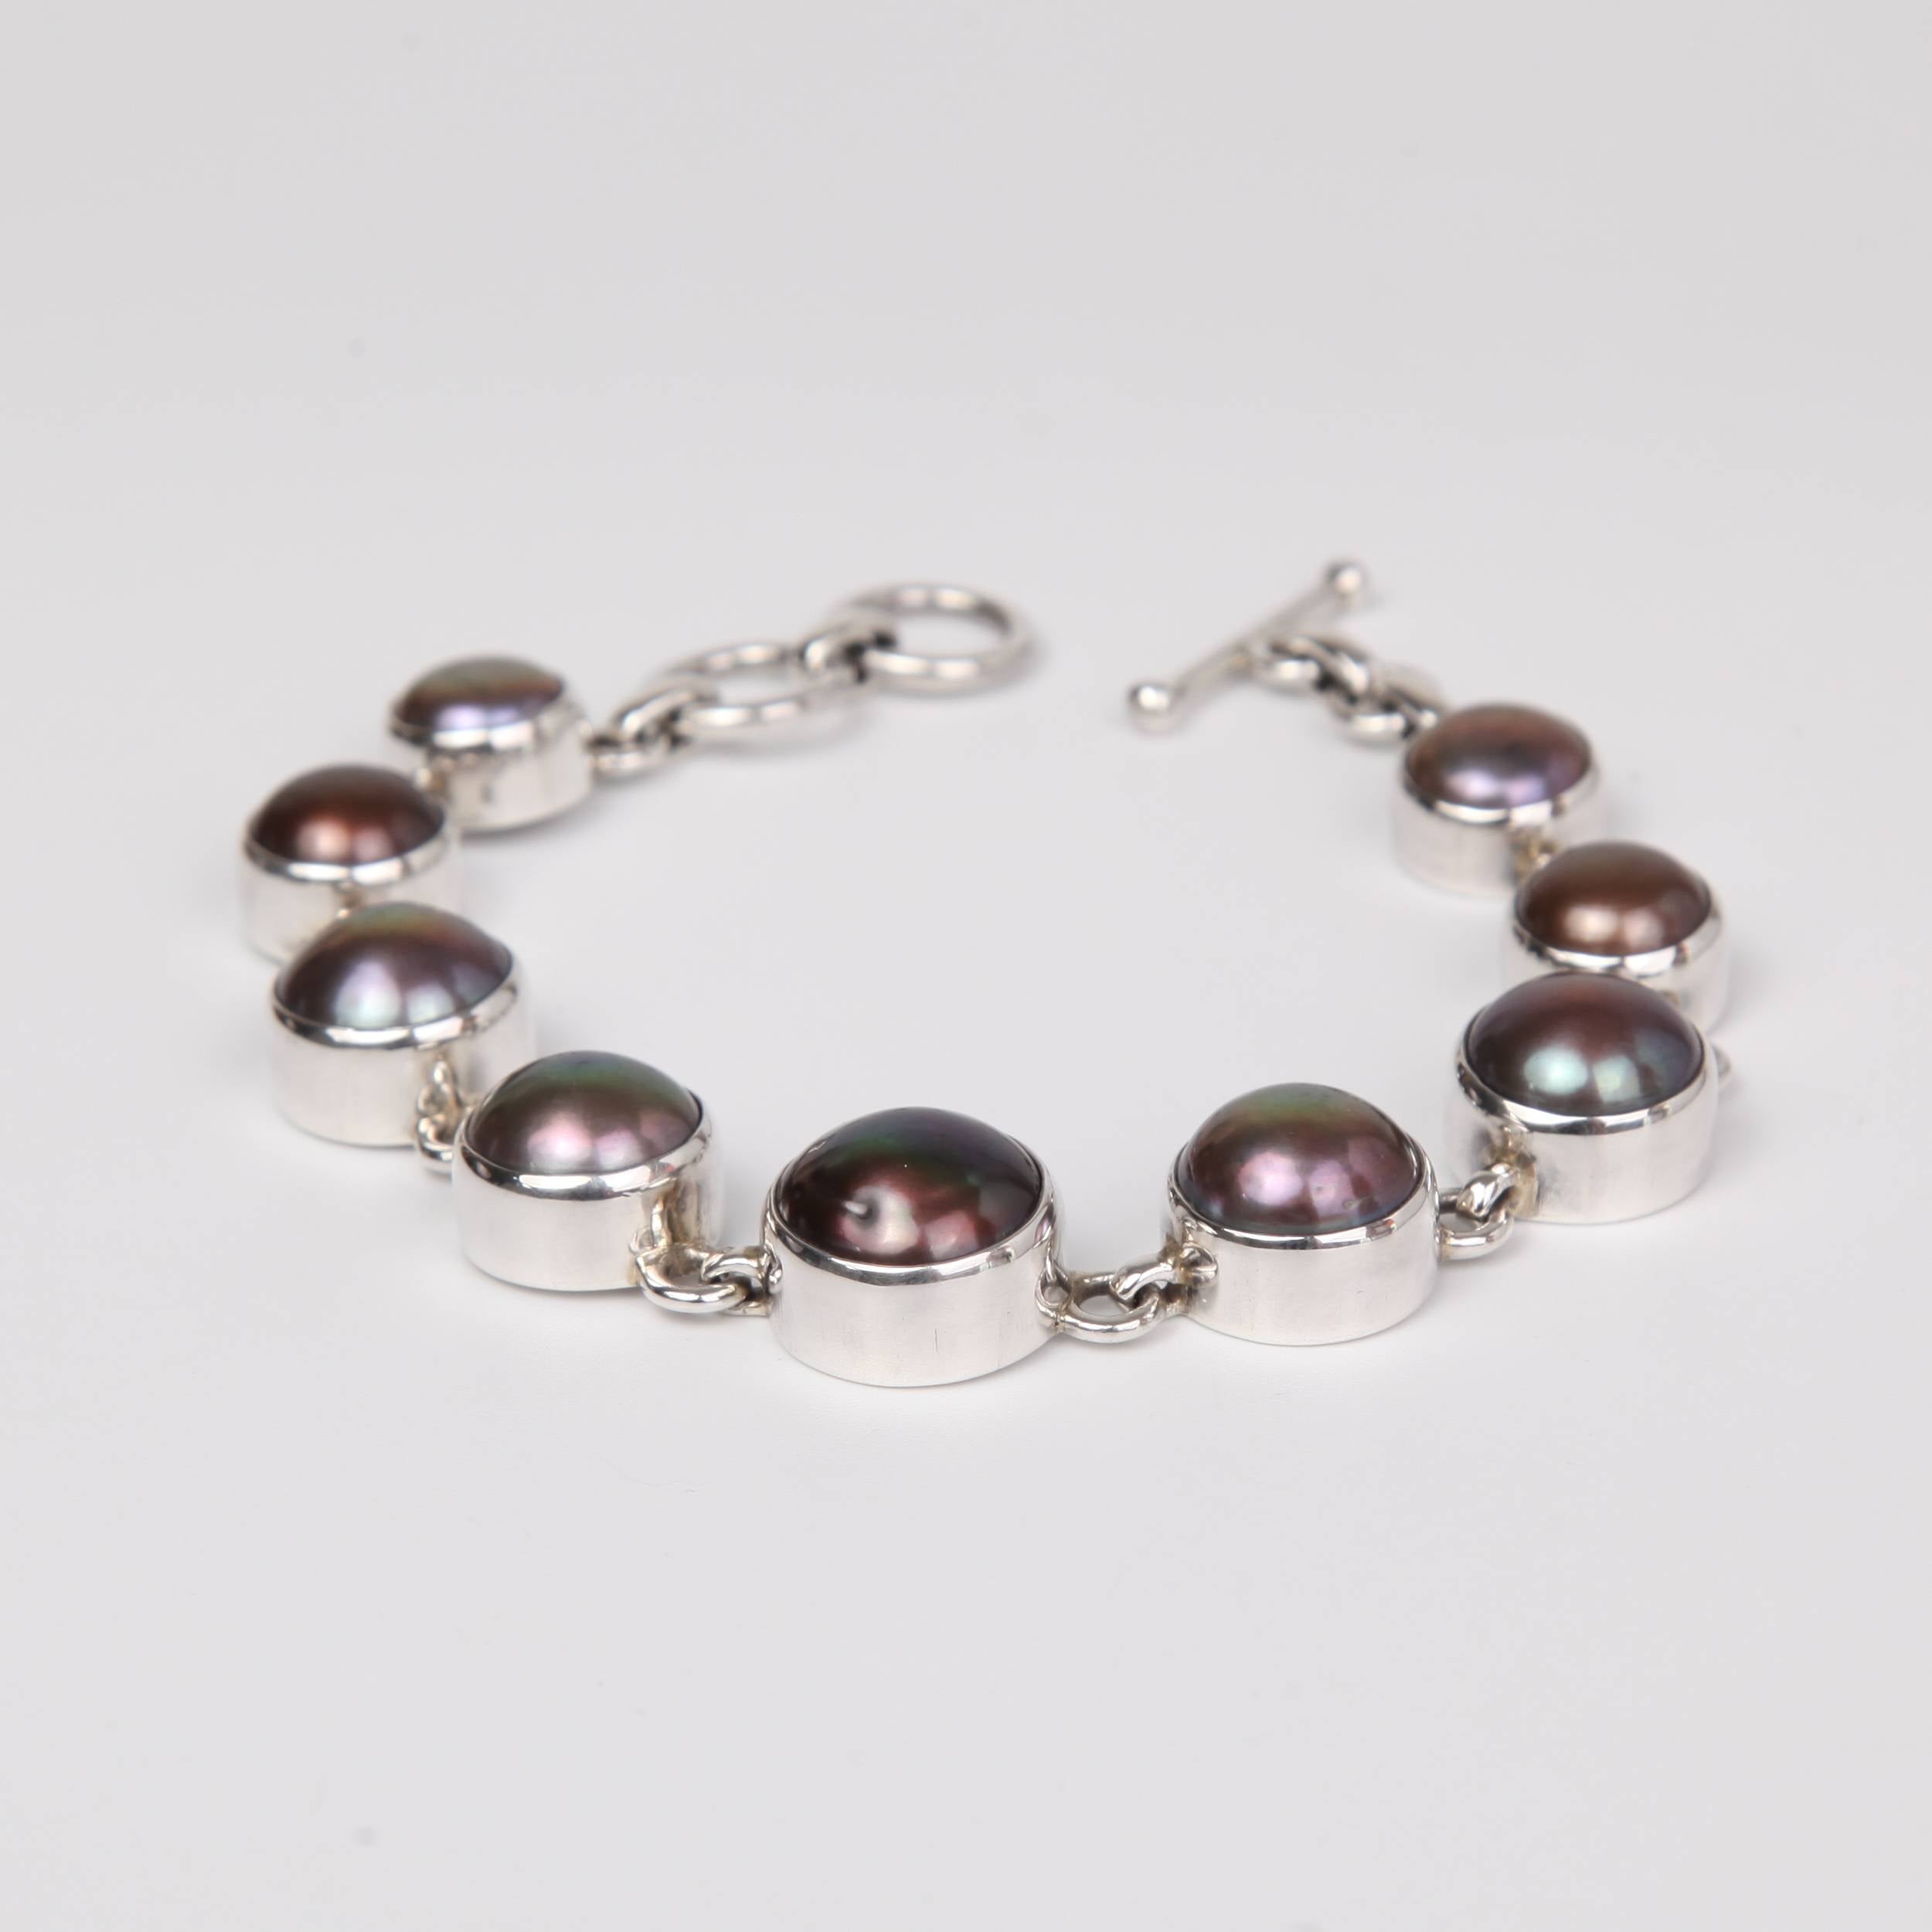 Dark Sterling Silver Bracelet with Fresh Water Pearls